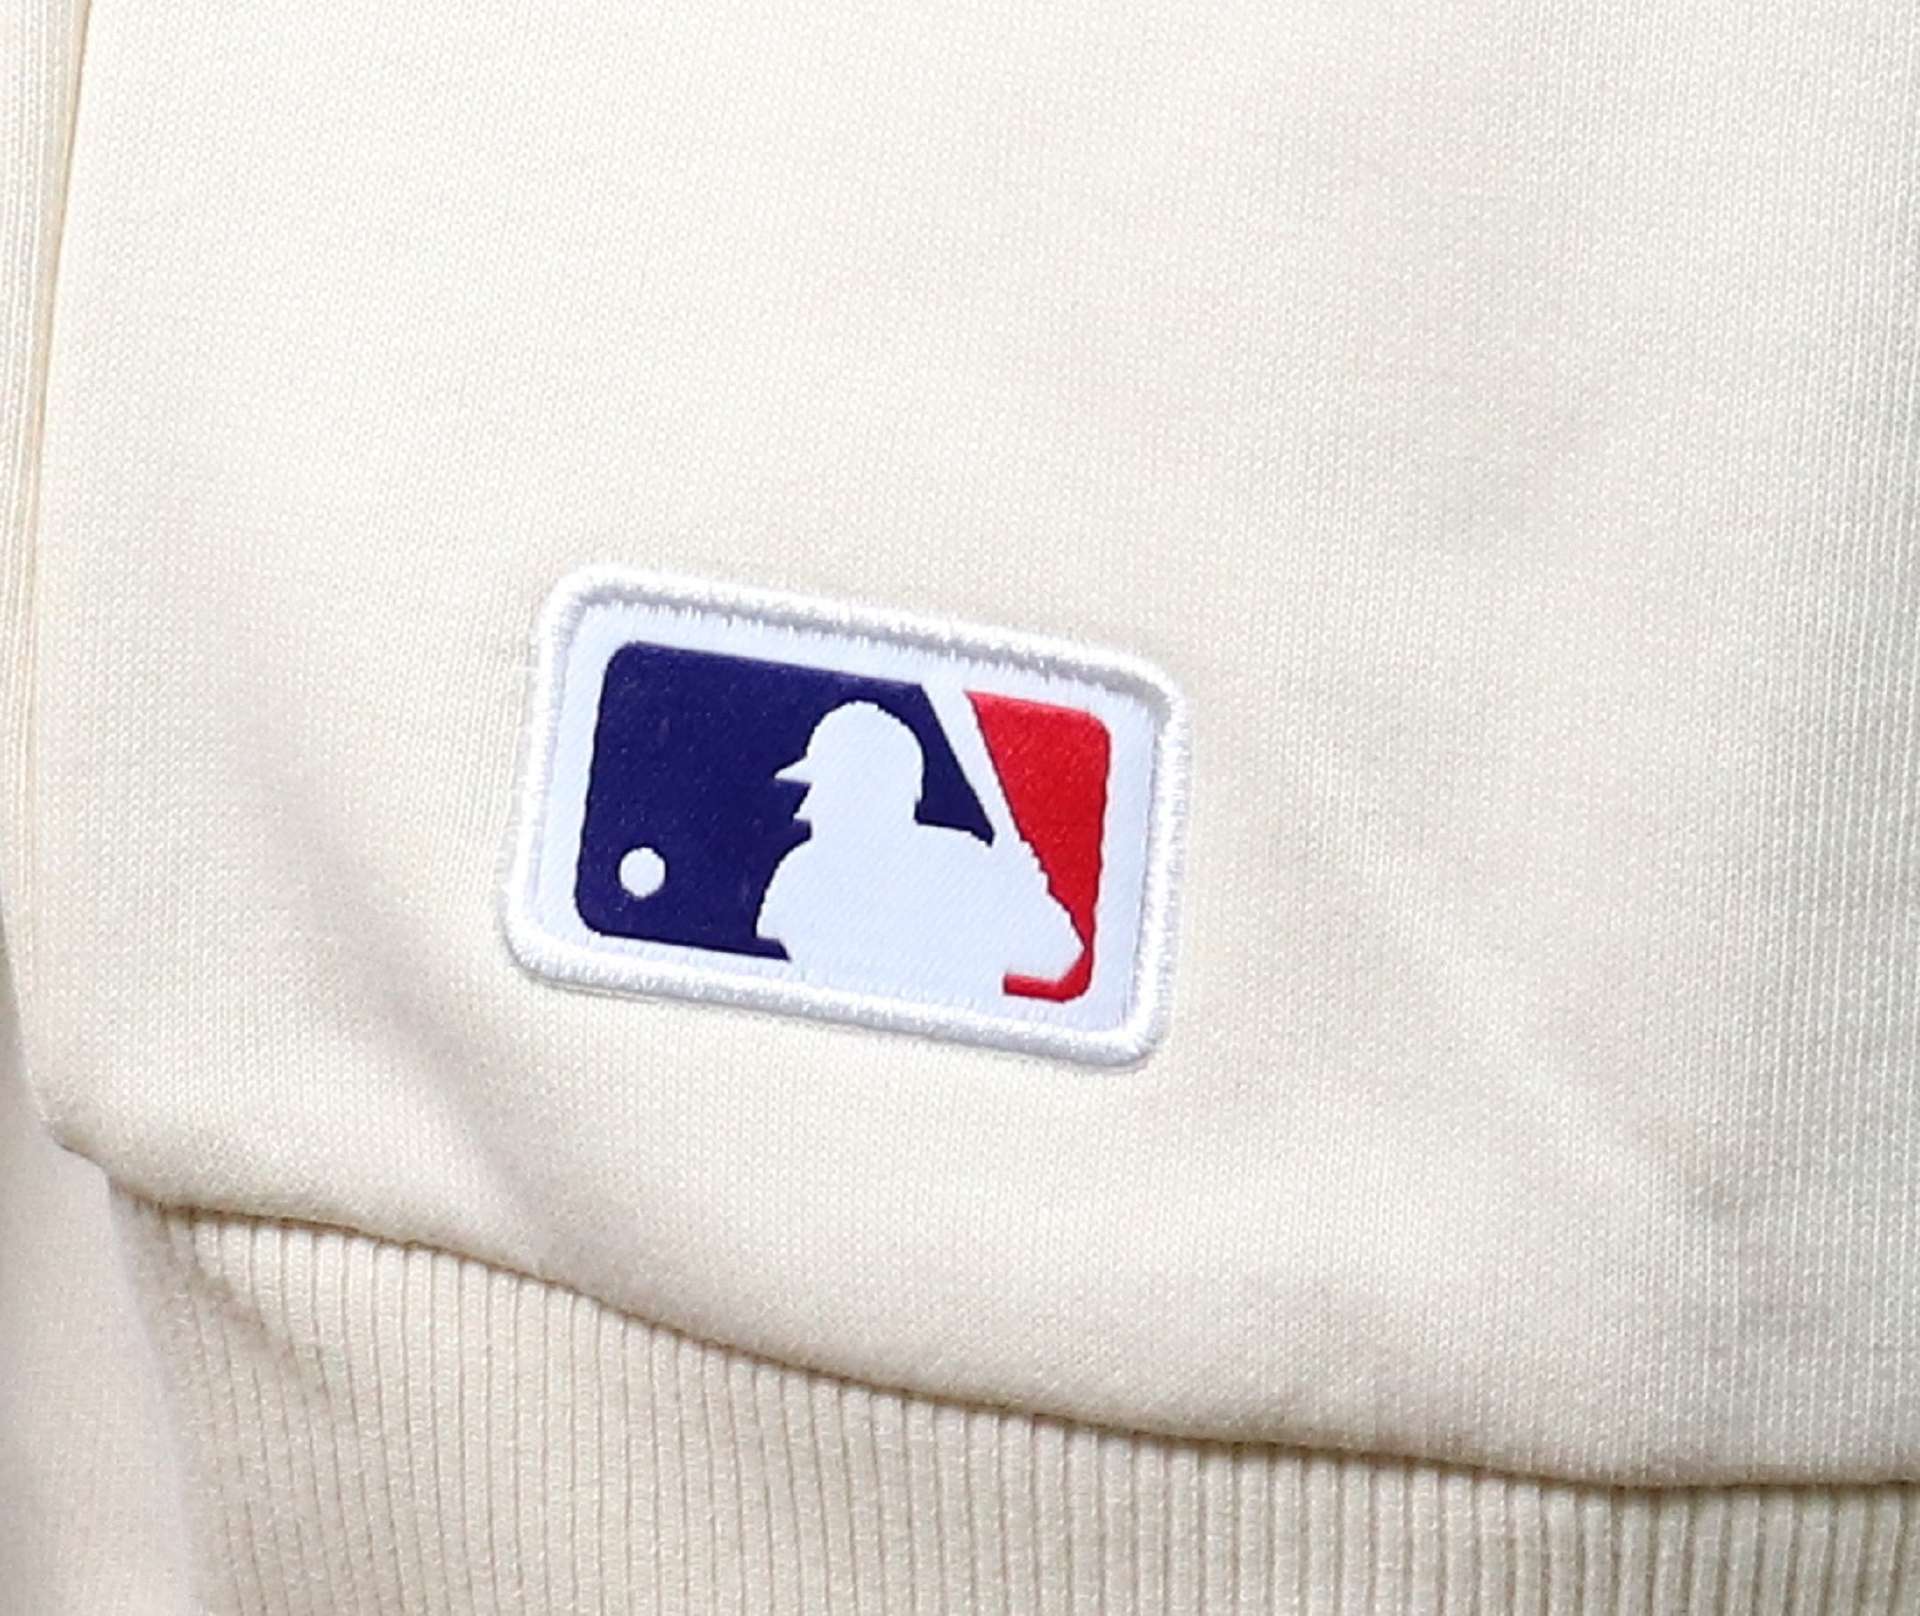 New York Yankees Unbleached MLB Seasonal Infill Logo Oversized Hoody New Era